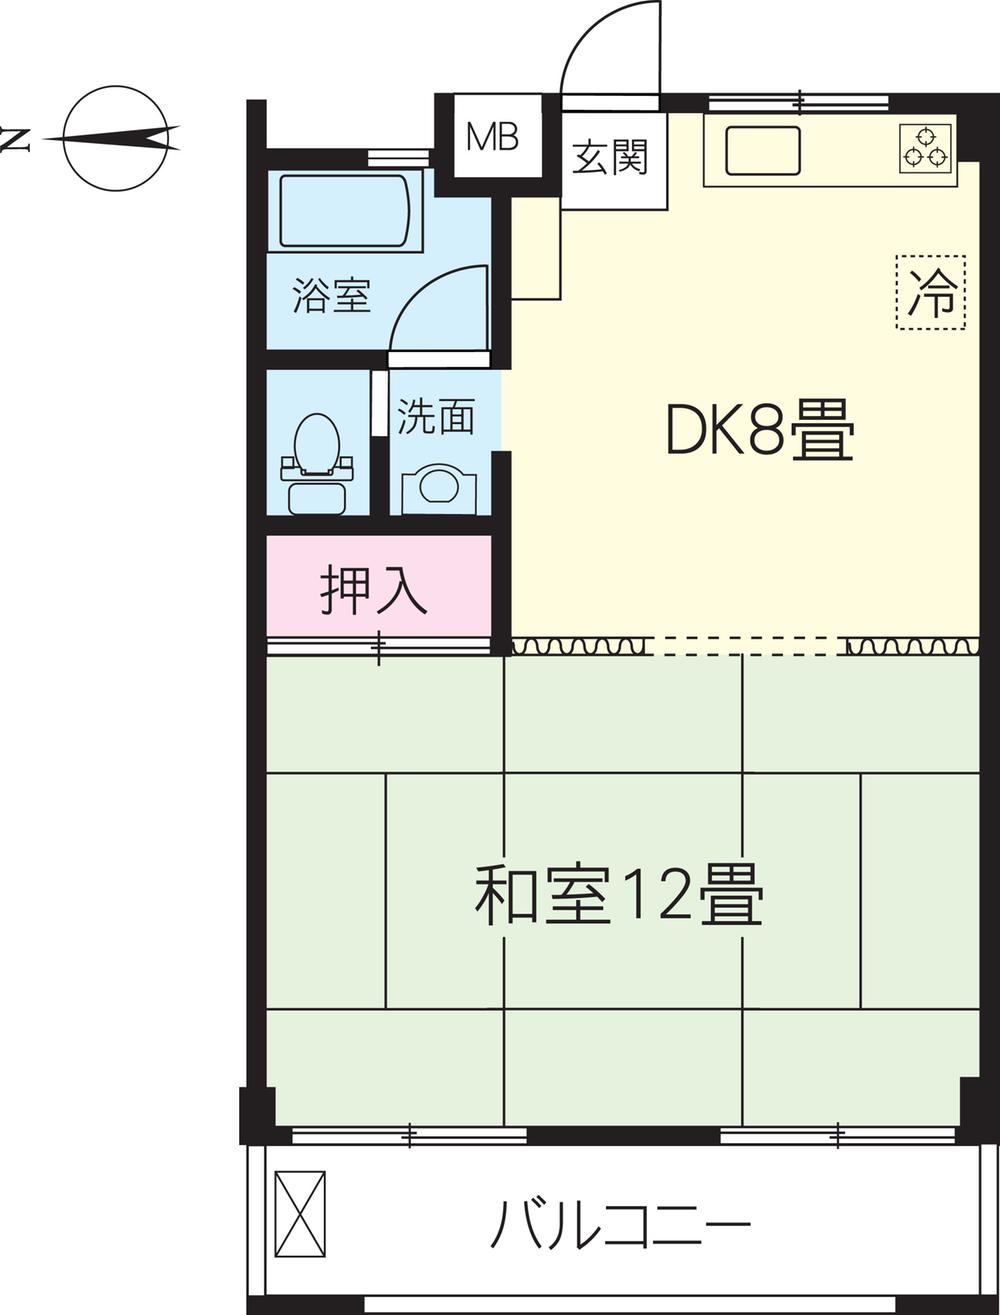 Floor plan. 1DK, Price $ 40,000, Occupied area 40.81 sq m , Balcony area 6.48 sq m